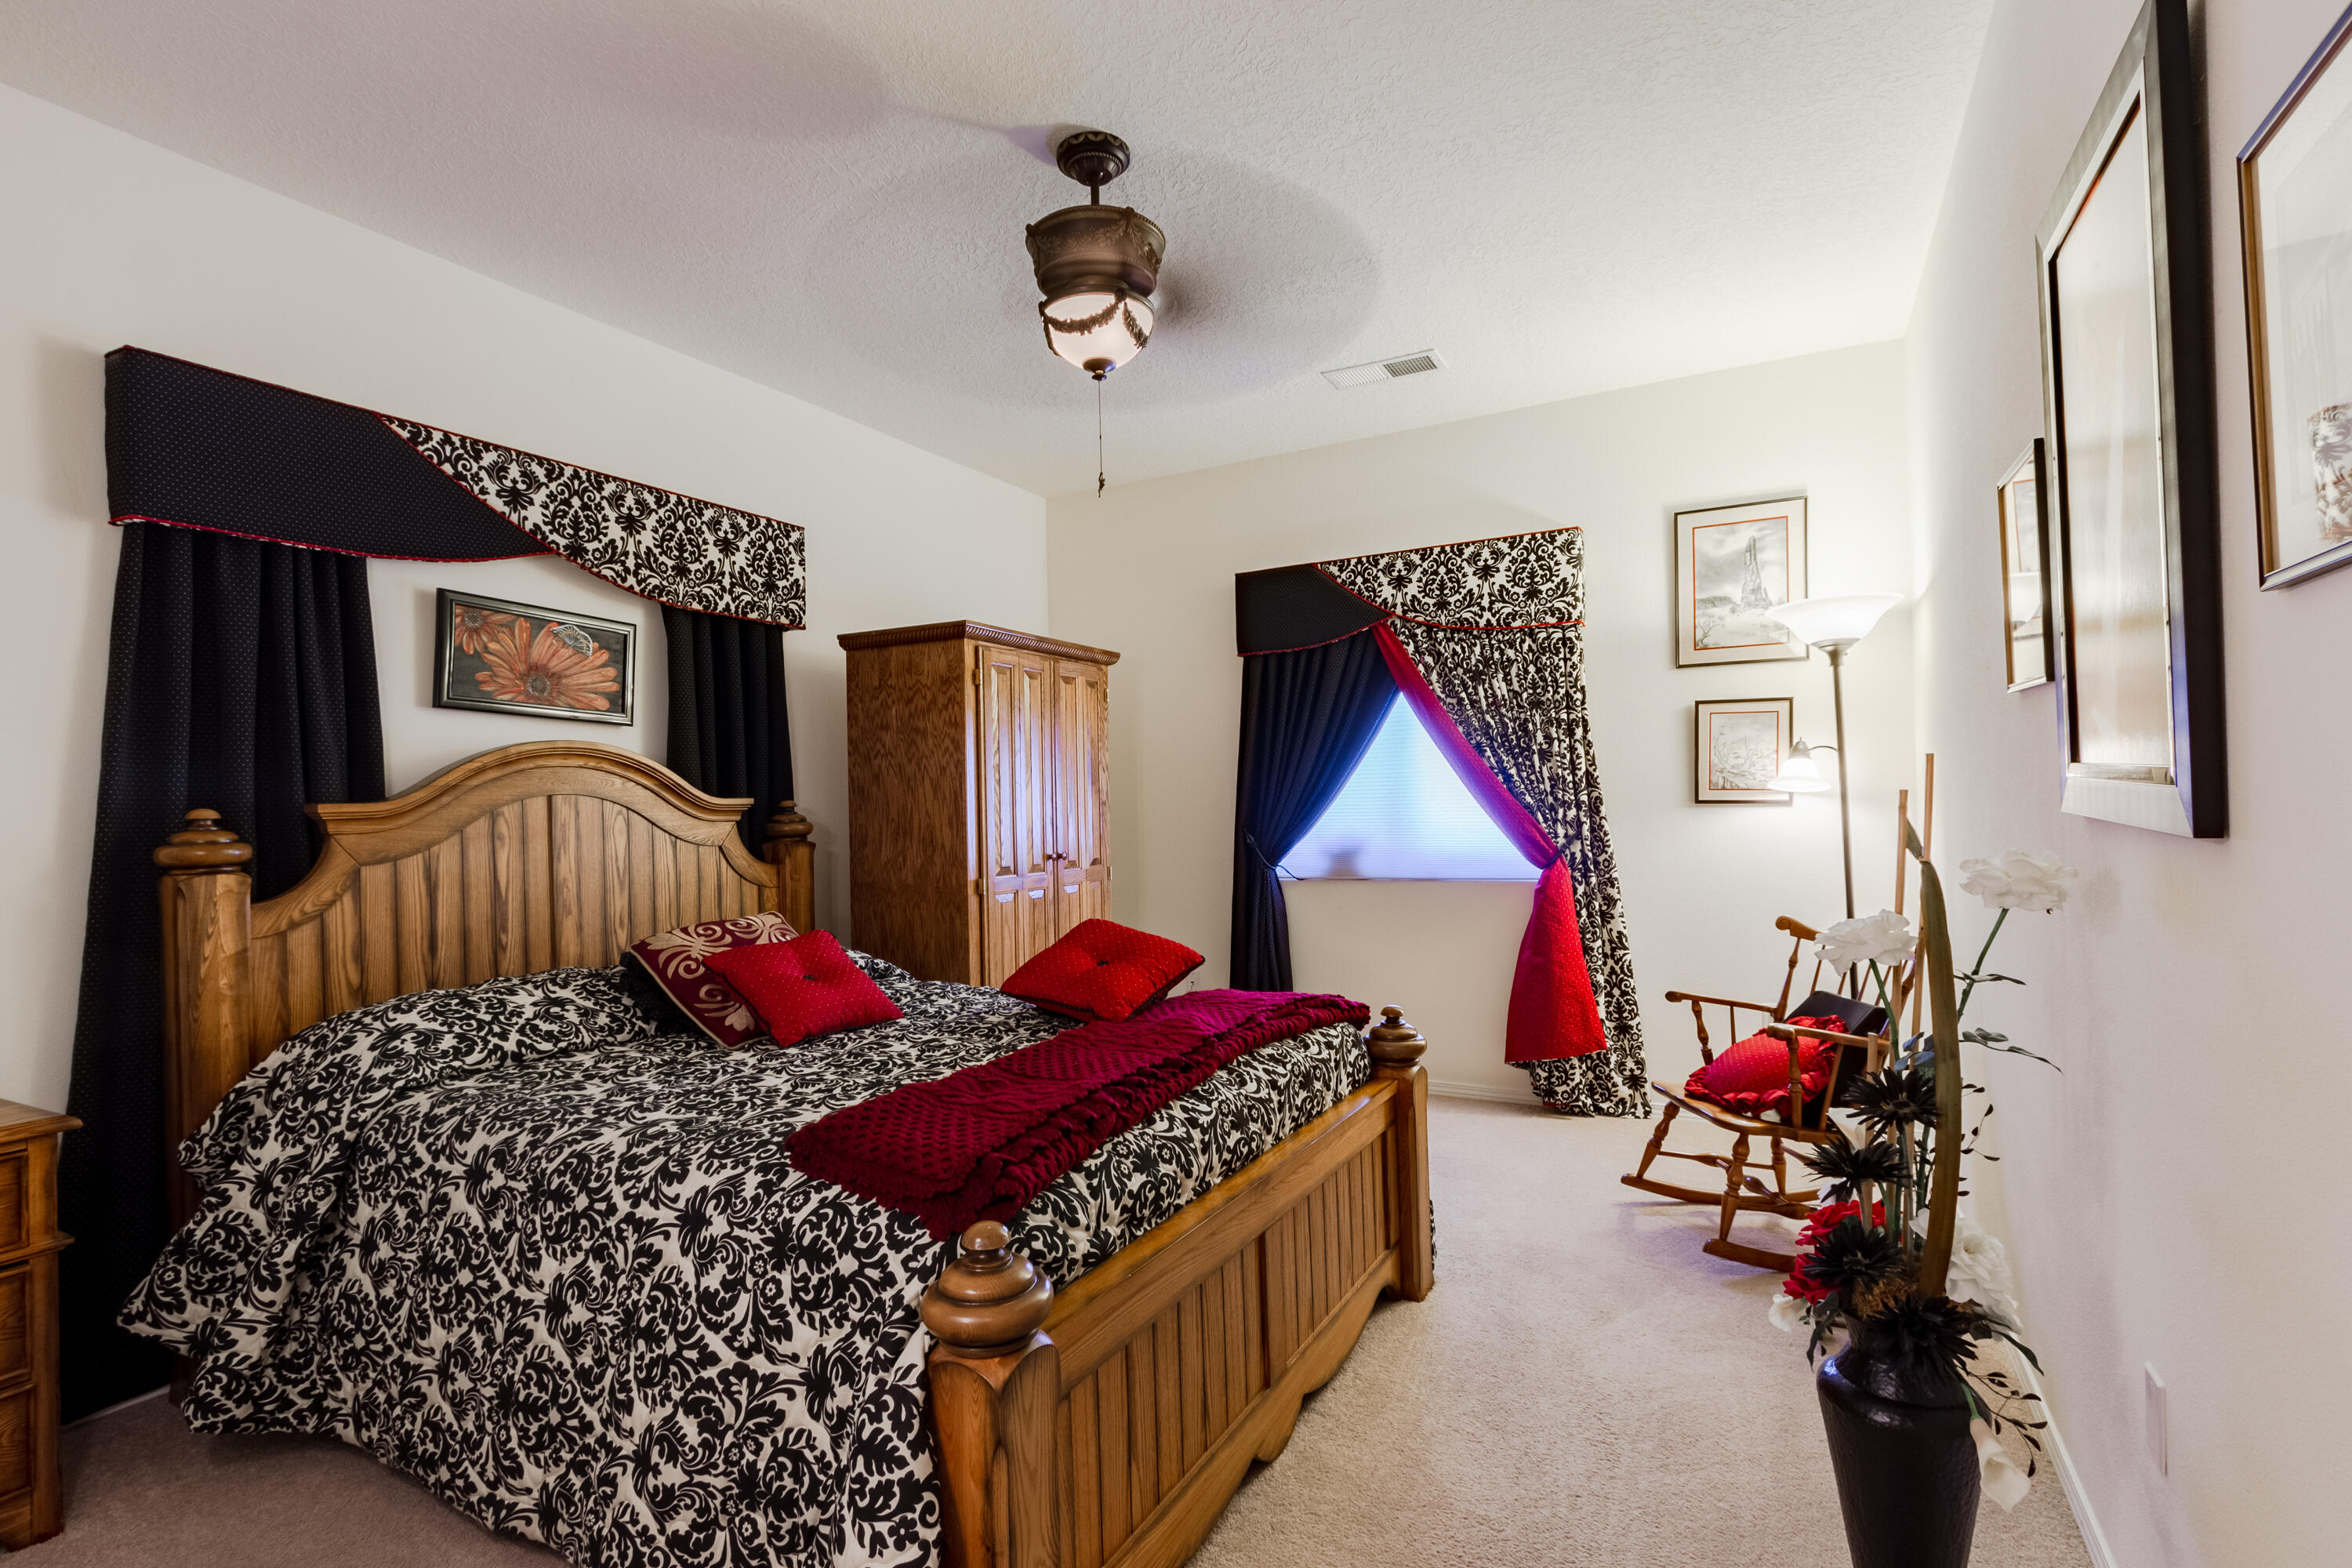 451 Zuni River Circle SW, Los Lunas, New Mexico 87031, 3 Bedrooms Bedrooms, ,2 BathroomsBathrooms,Residential,For Sale,451 Zuni River Circle SW,1061978